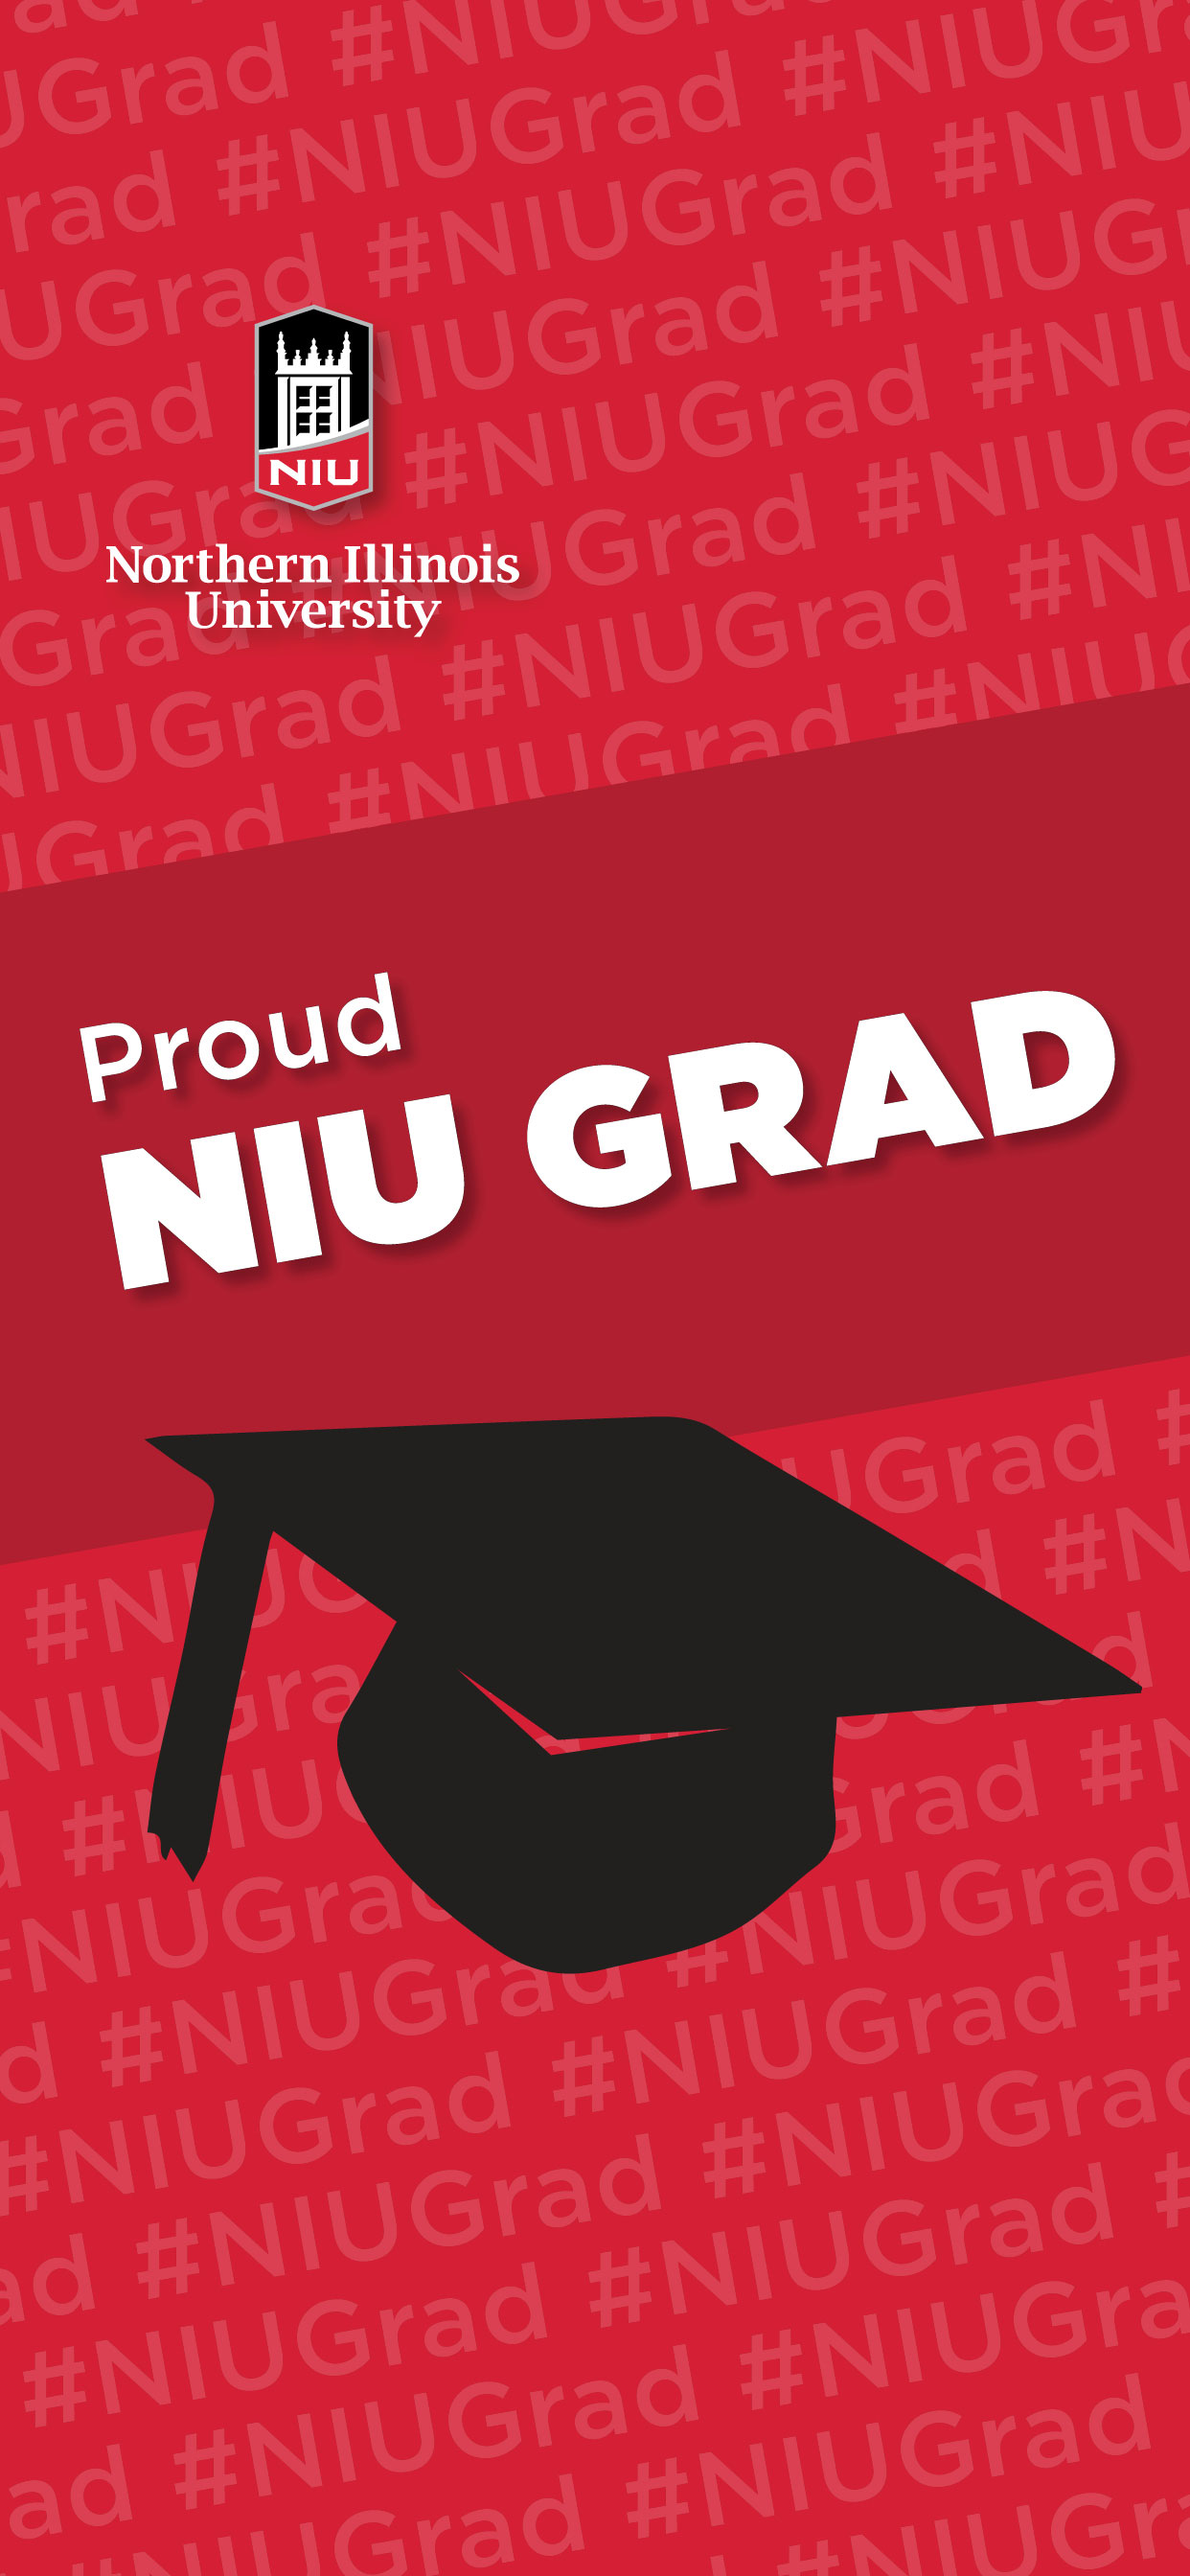 Proud NIU Grad - Red iPhone background